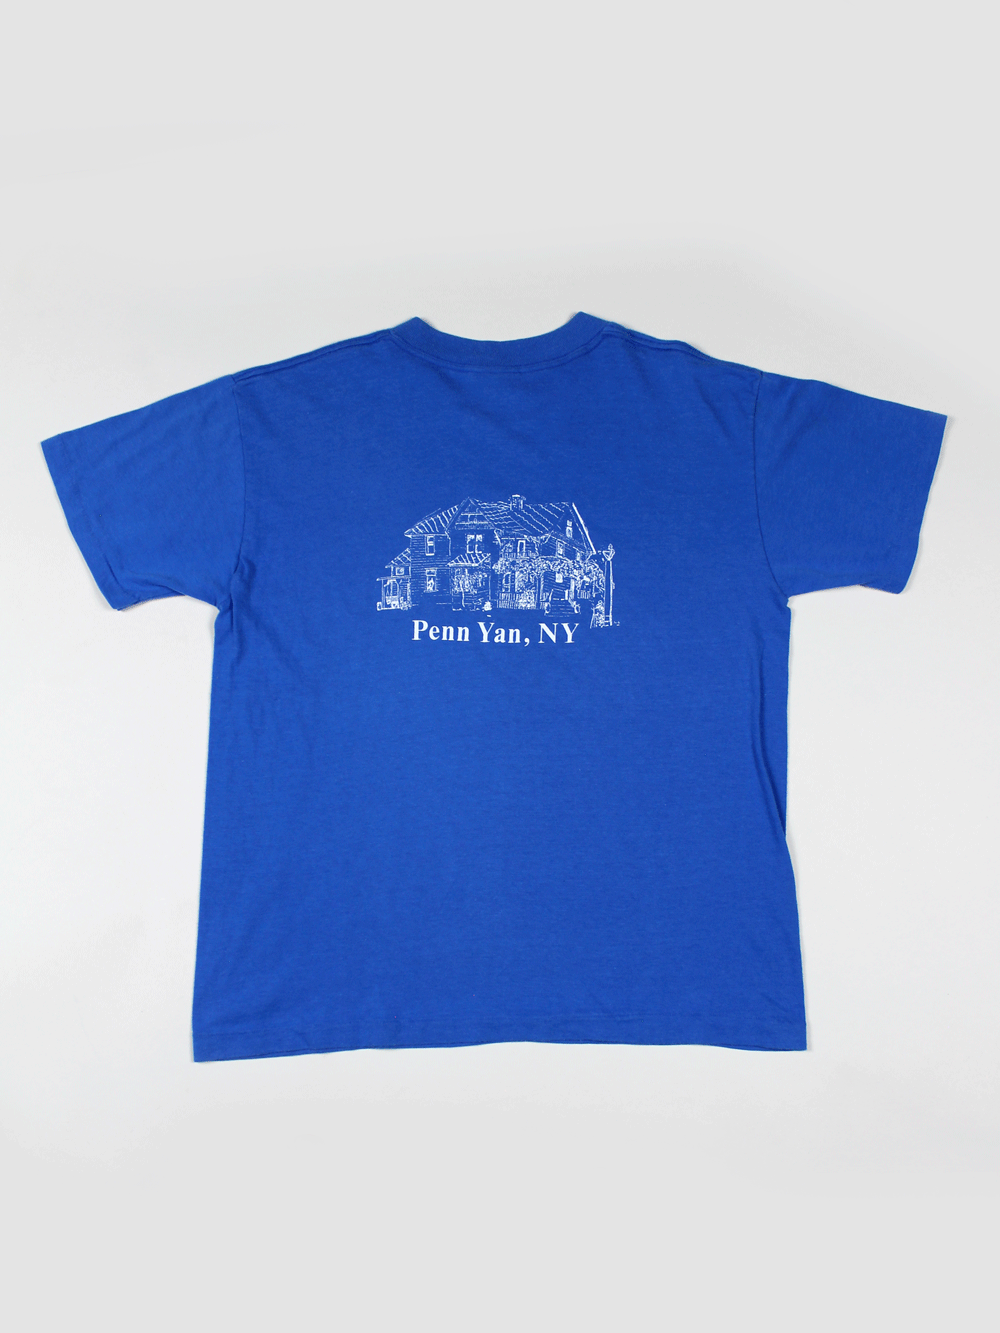 Penn Yan Vintage T-shirt